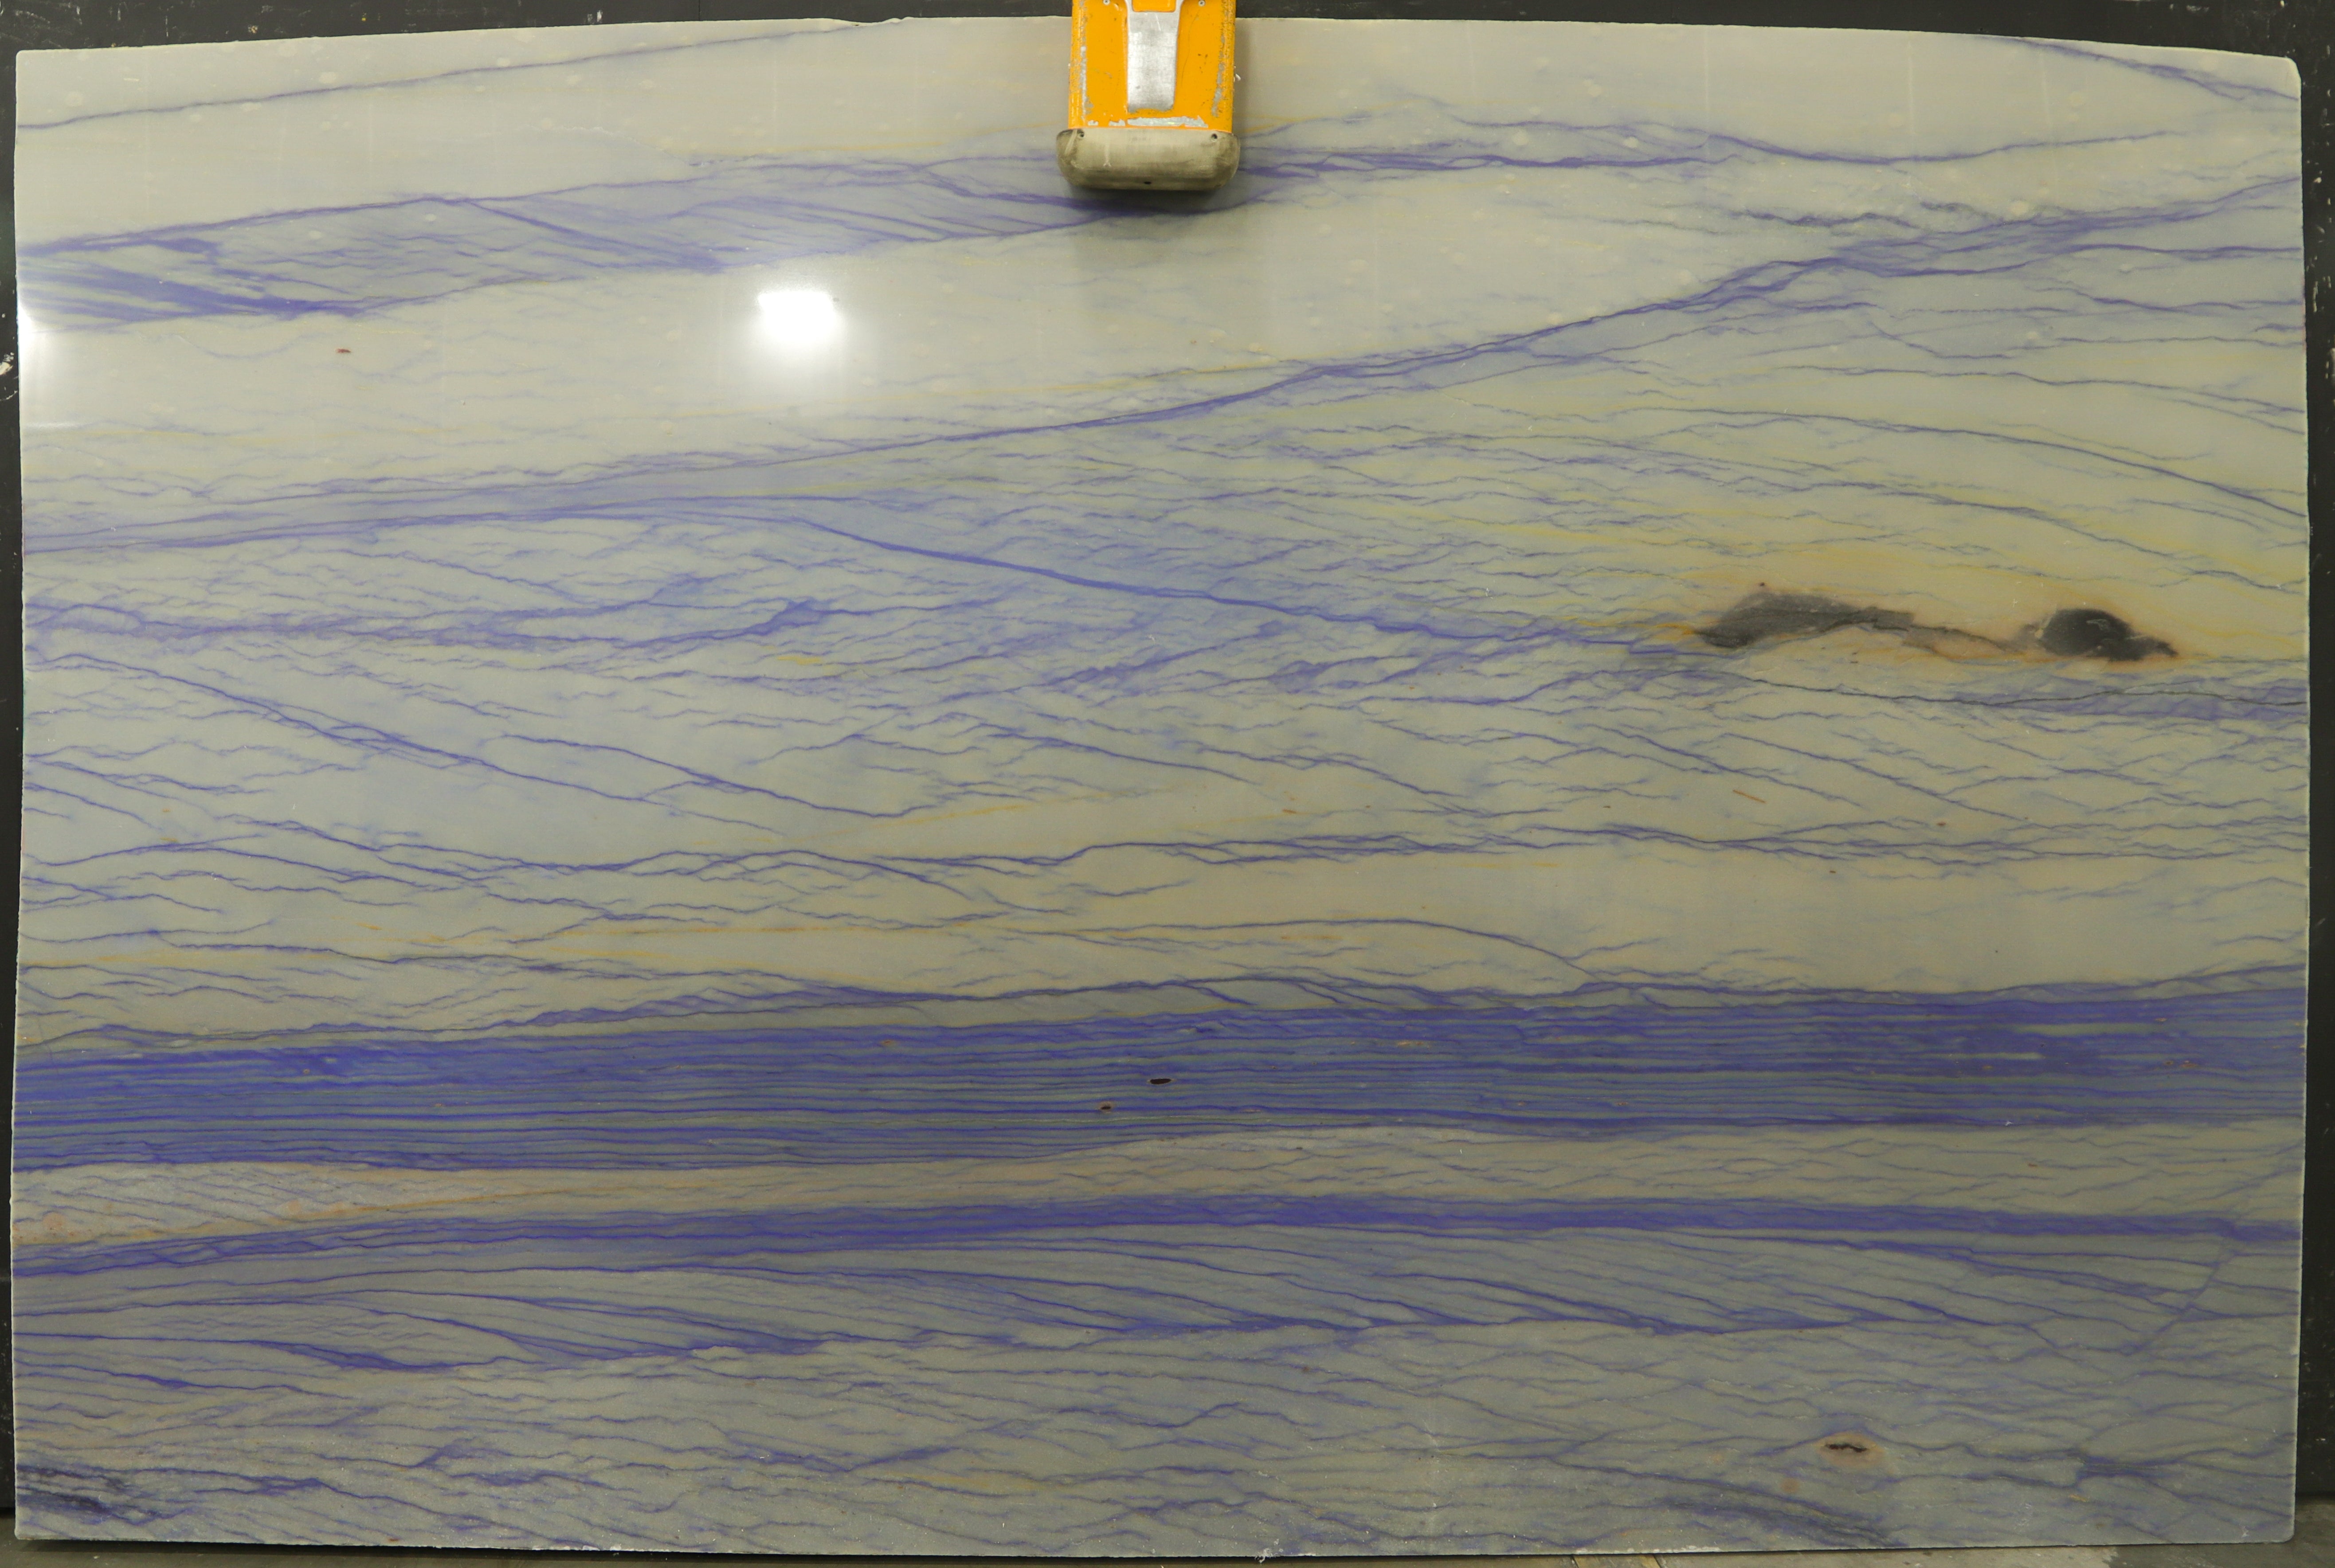  Azul Macaubas A1 Select Quartzite Slab 3/4  Polished Stone - 11162#13 -  72x109 